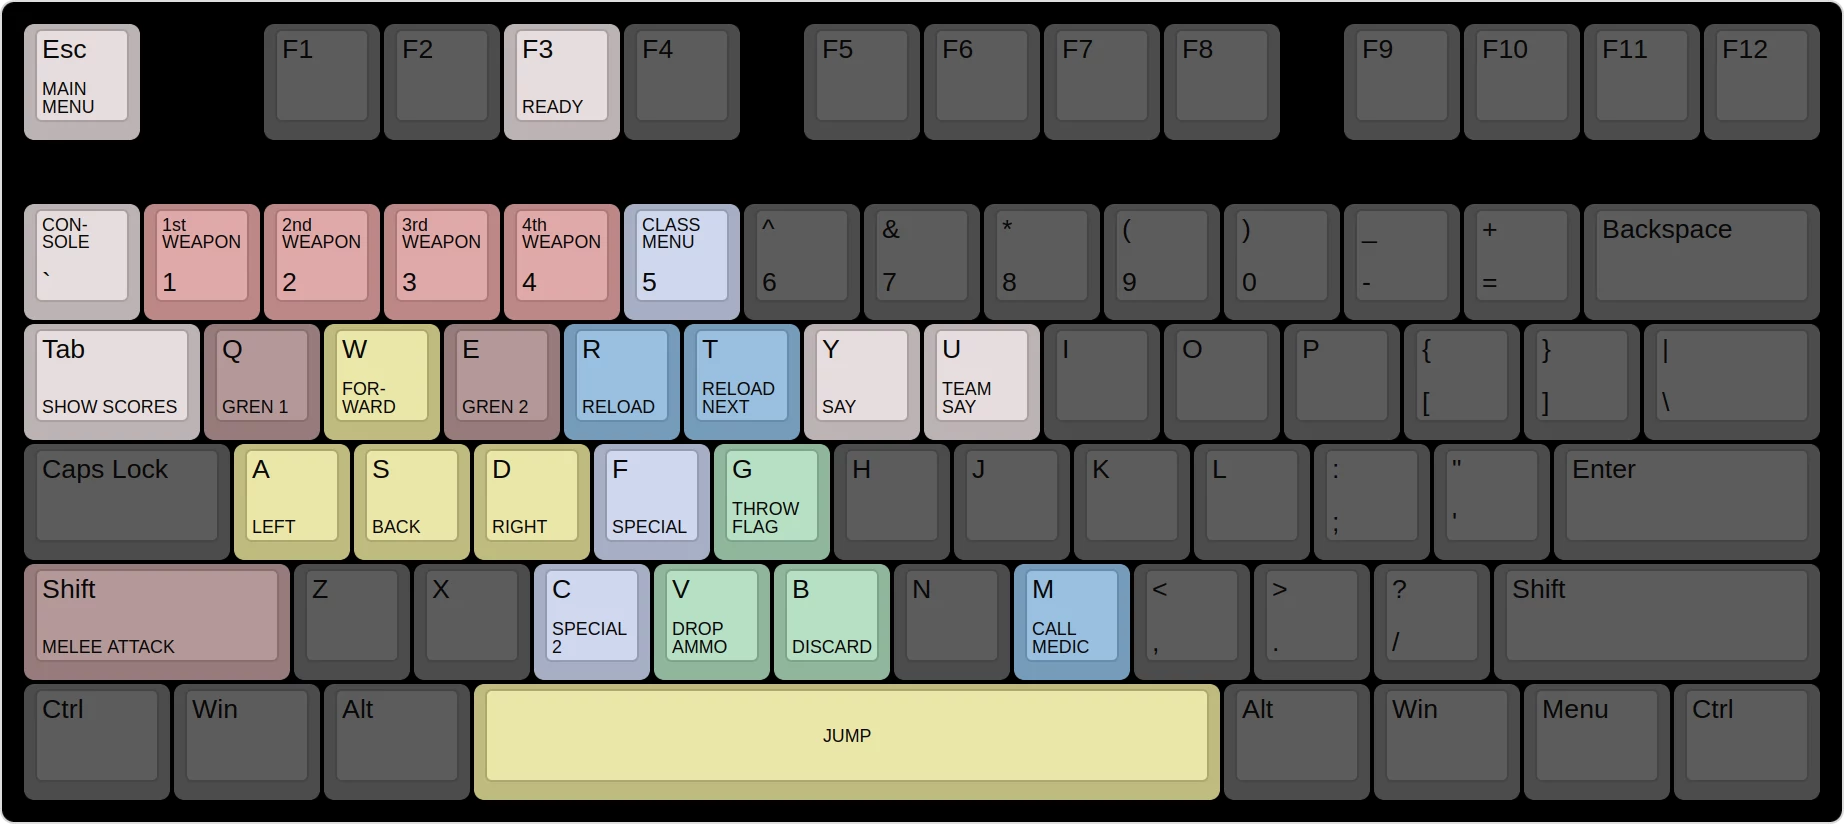 Default keyboard config